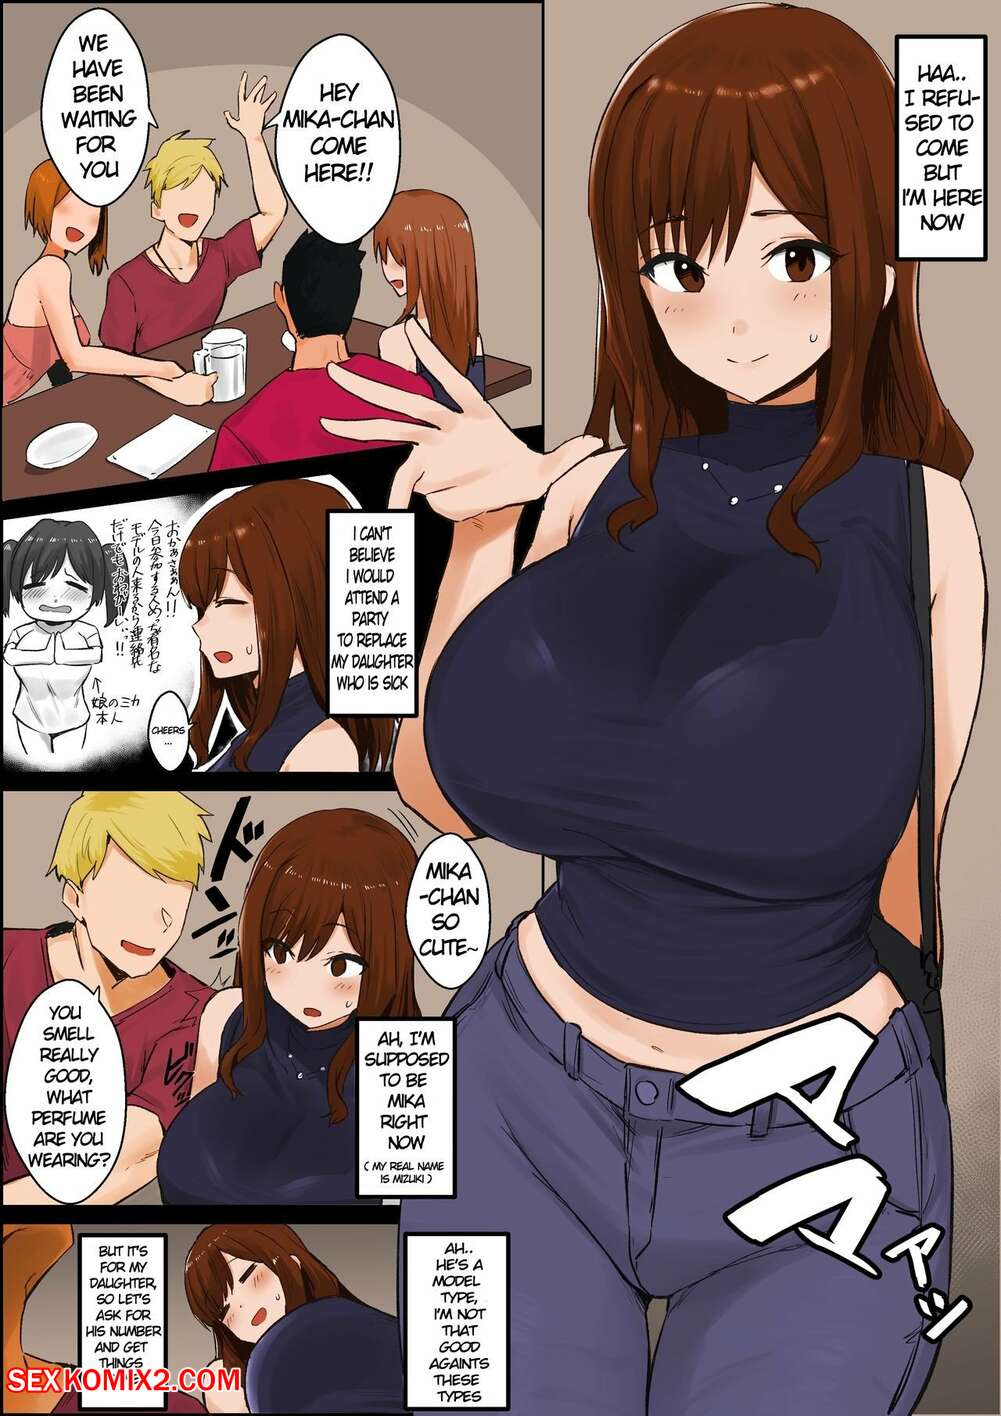 Hot anime comic porn